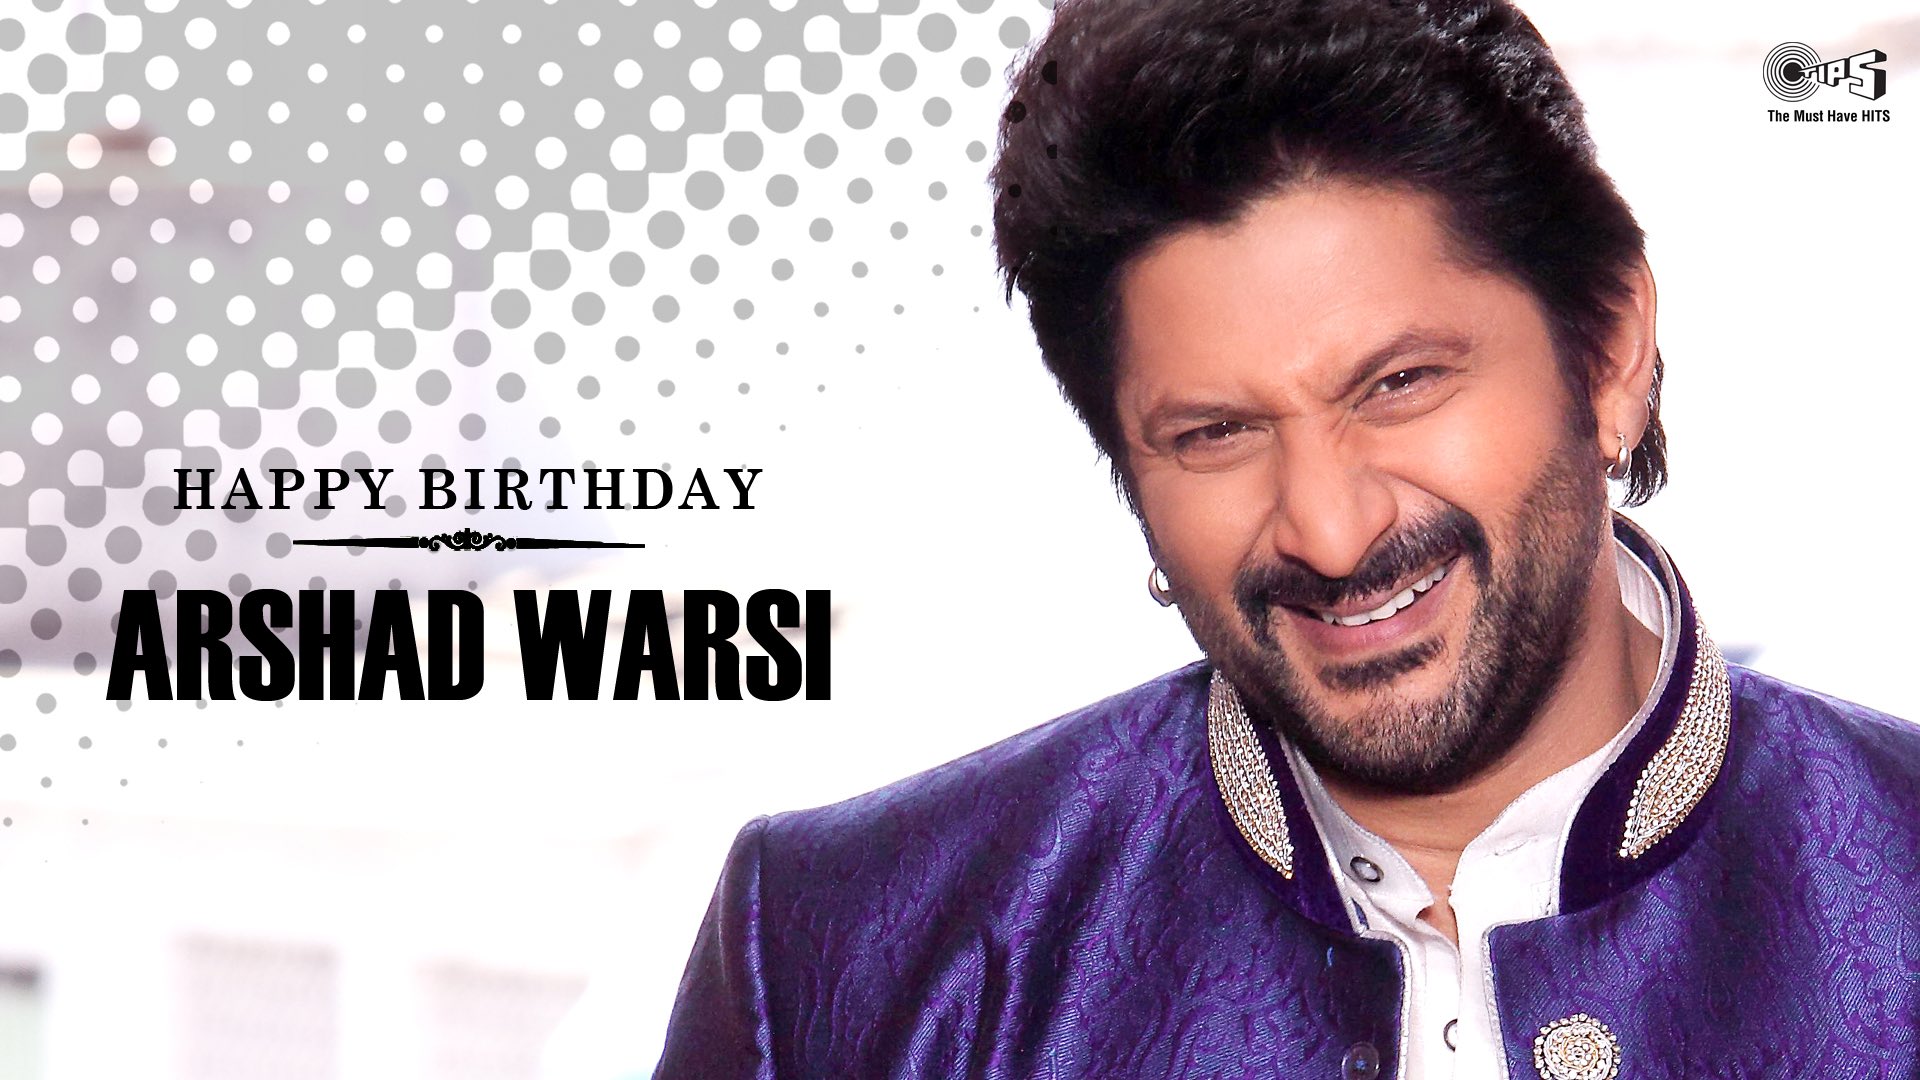 Happy birthday Arshad warsi bhai 